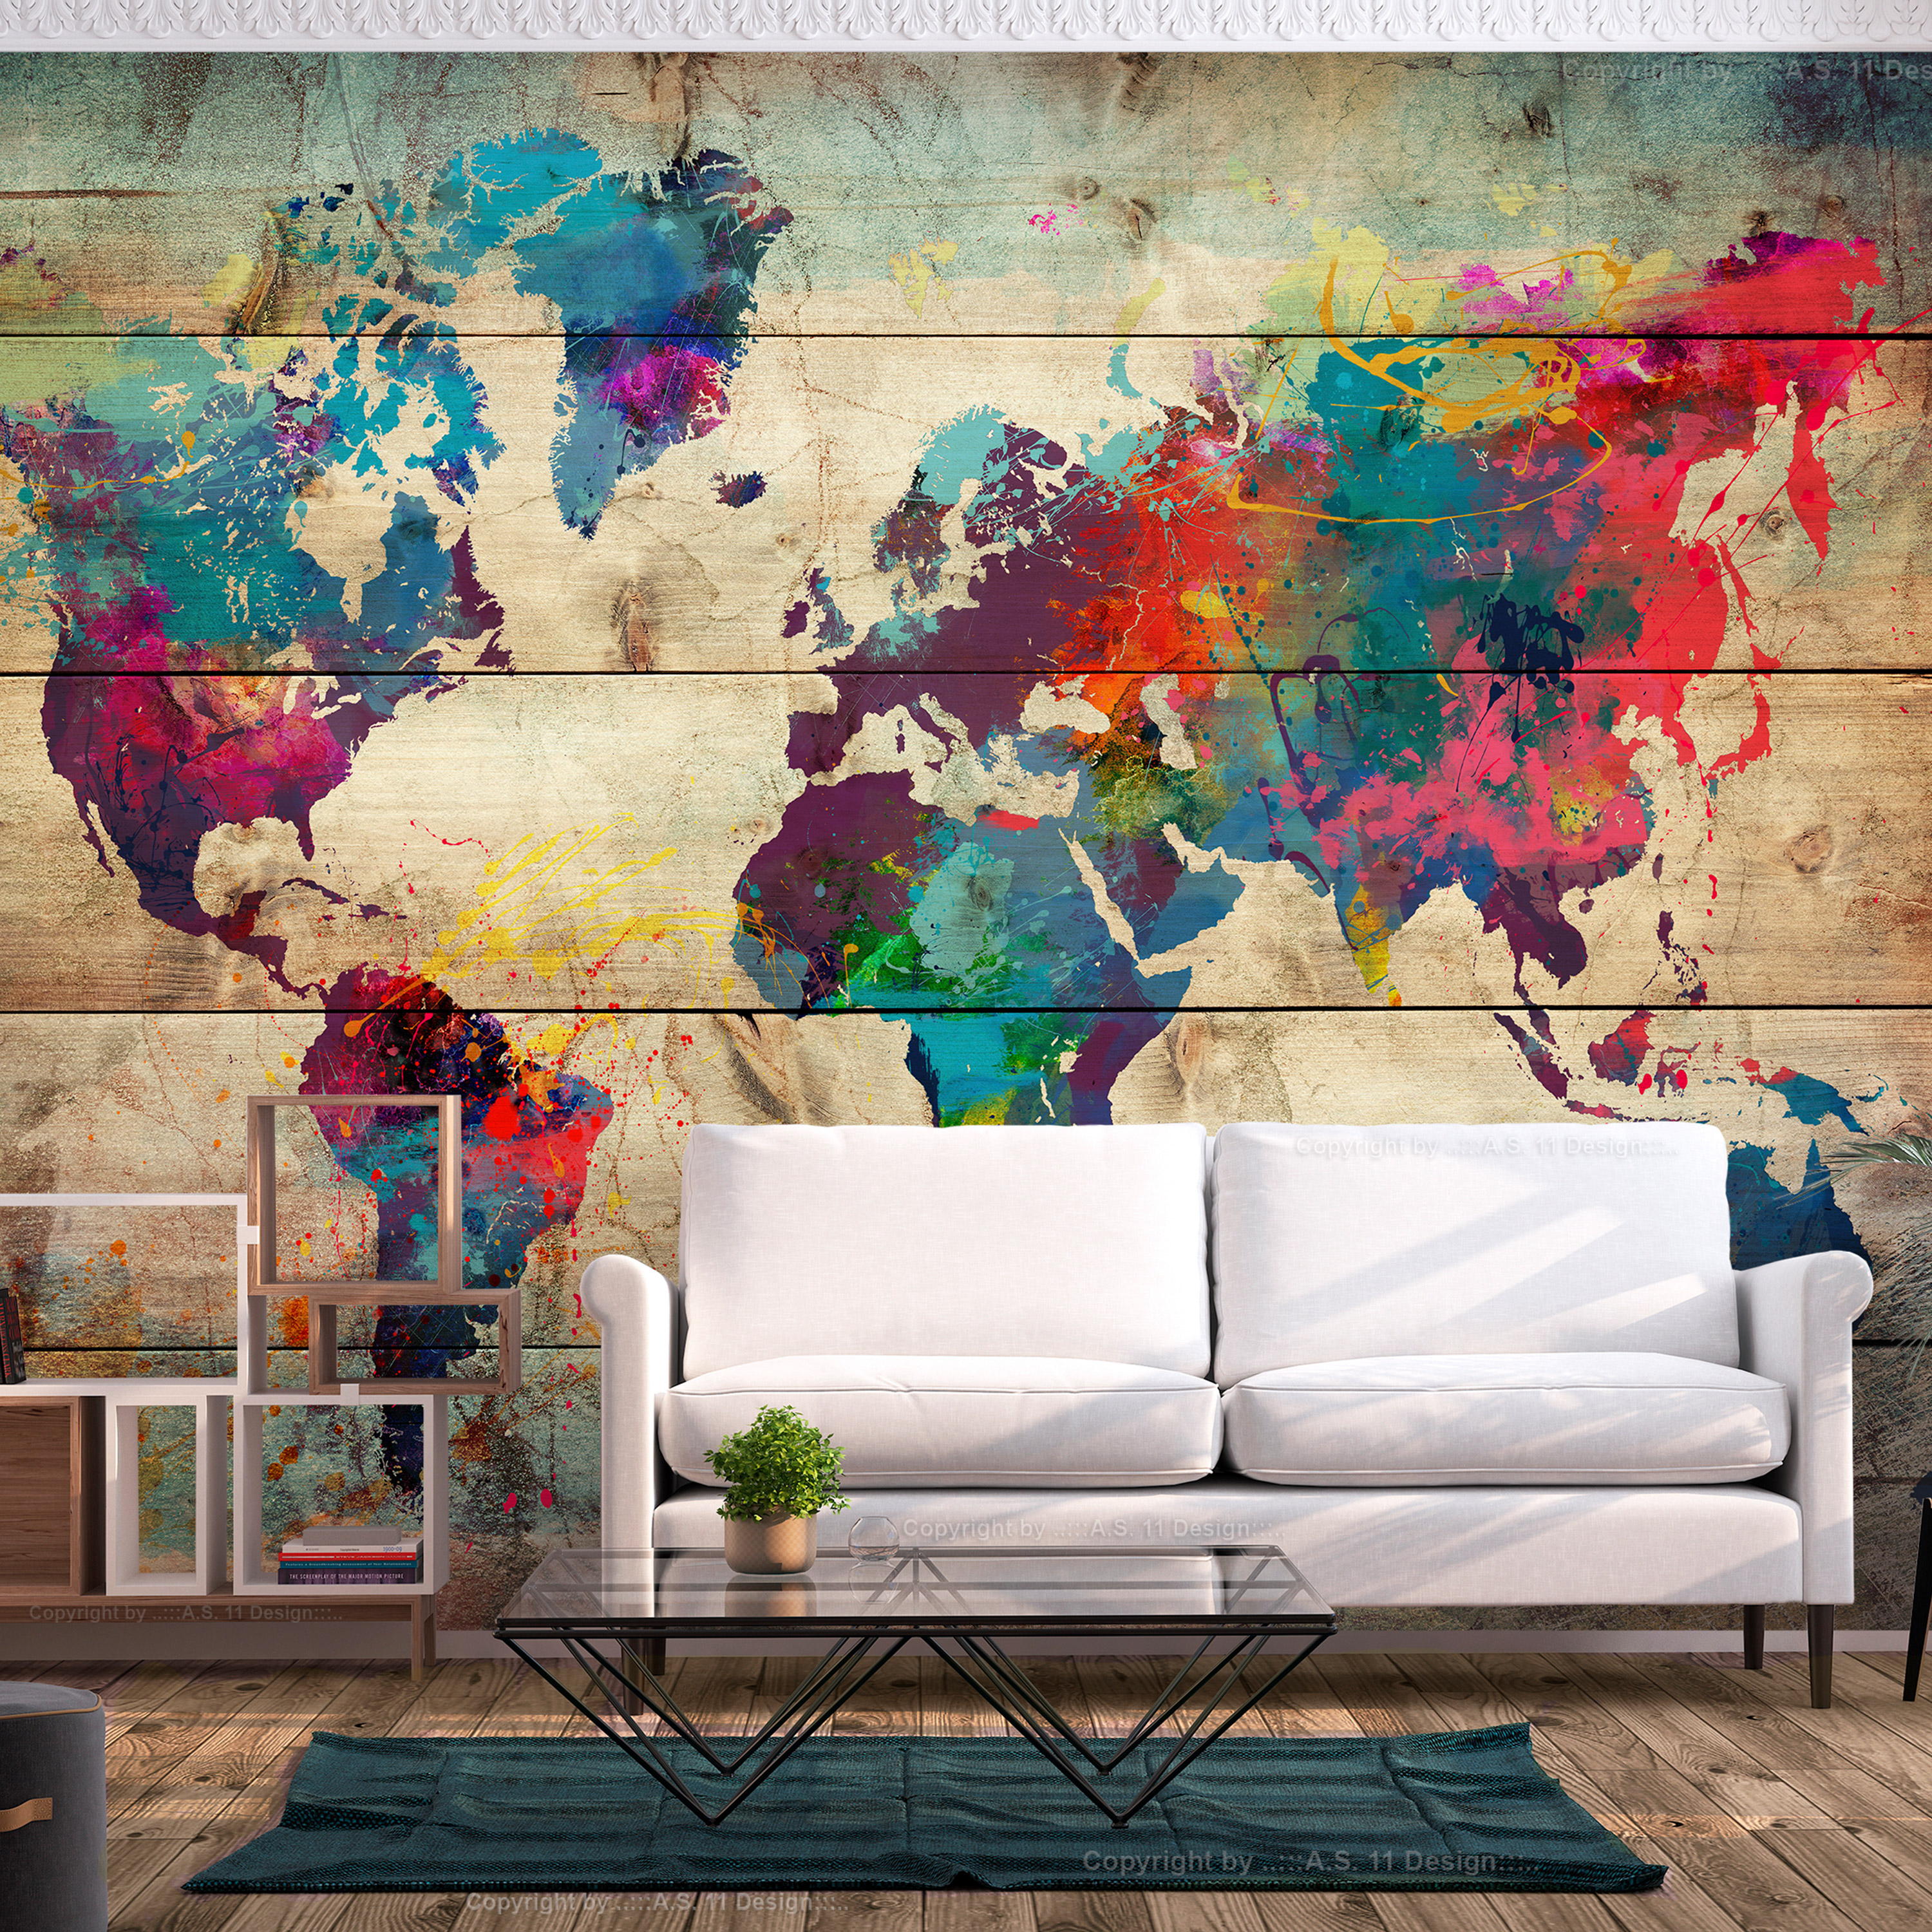 Self-adhesive Wallpaper - Multicolored Nature - 441x315